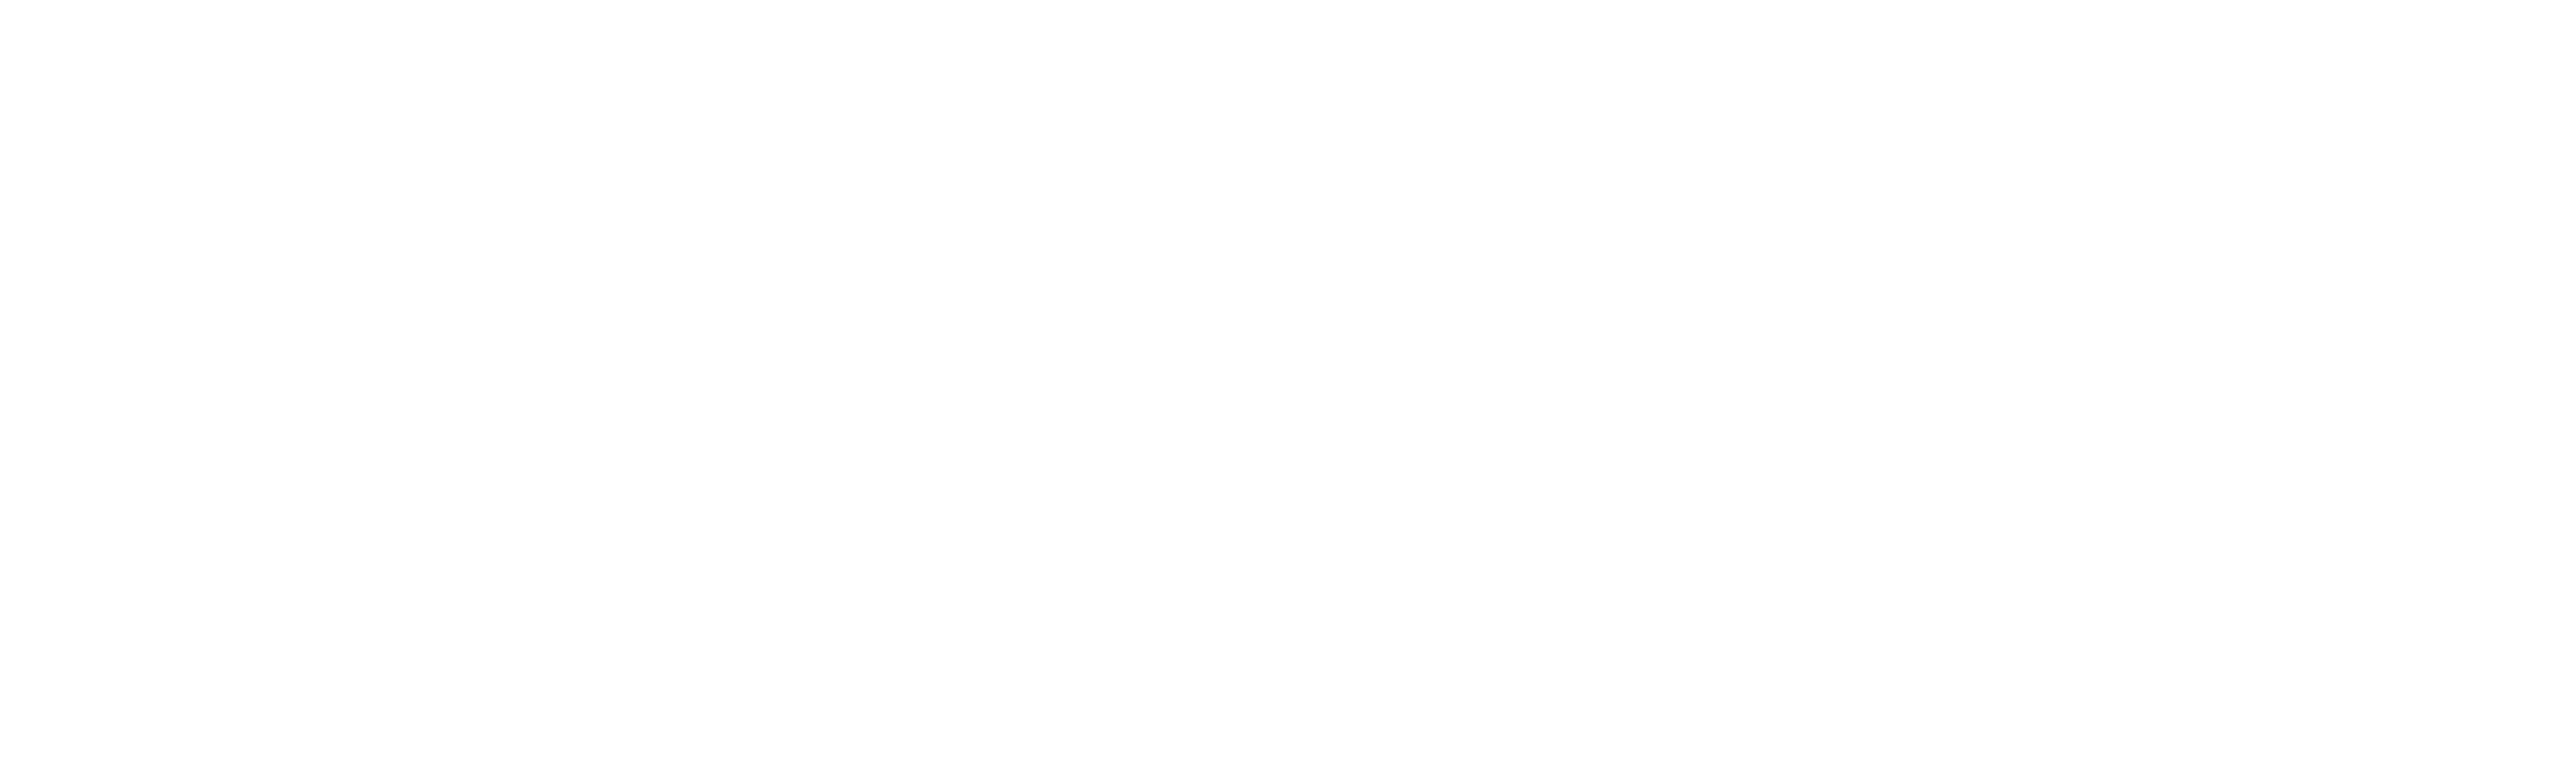 Shippo Logo White.png